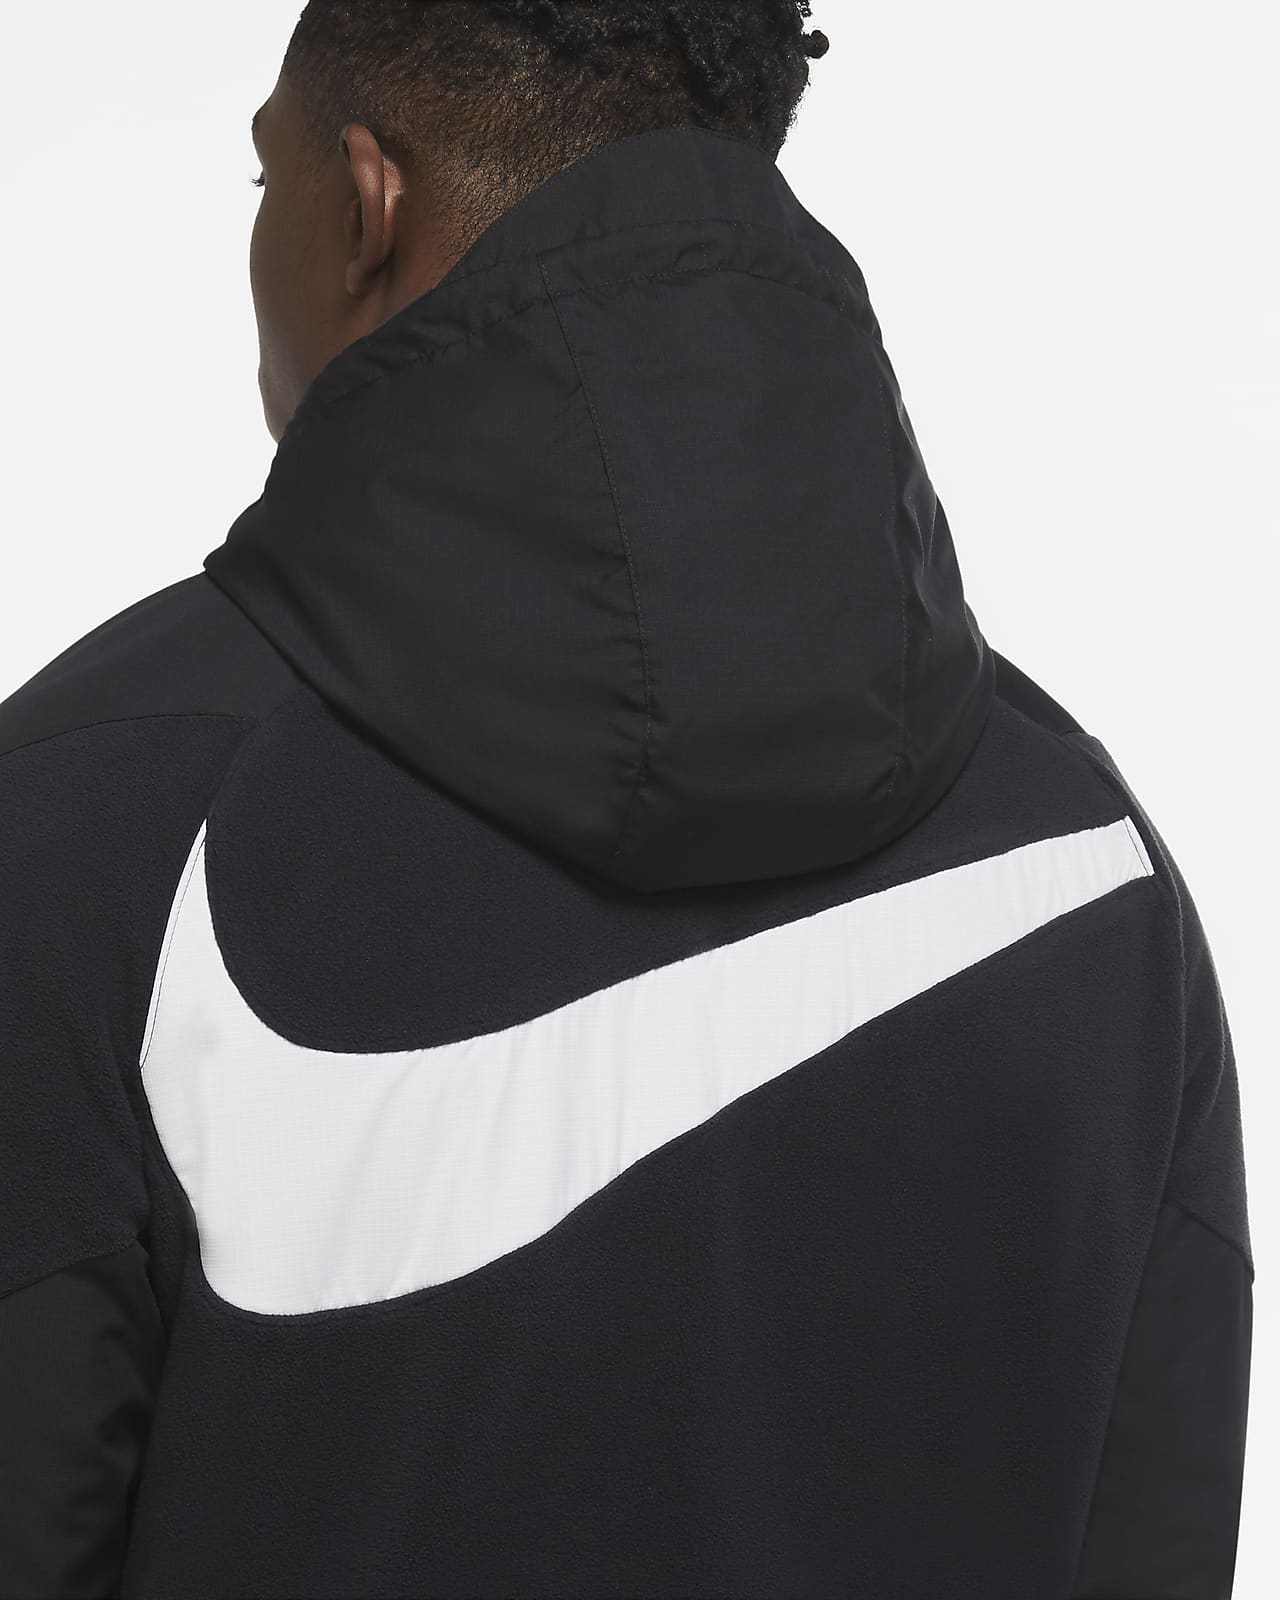 Nike F.C. AWF Men's Woven Football Jacket